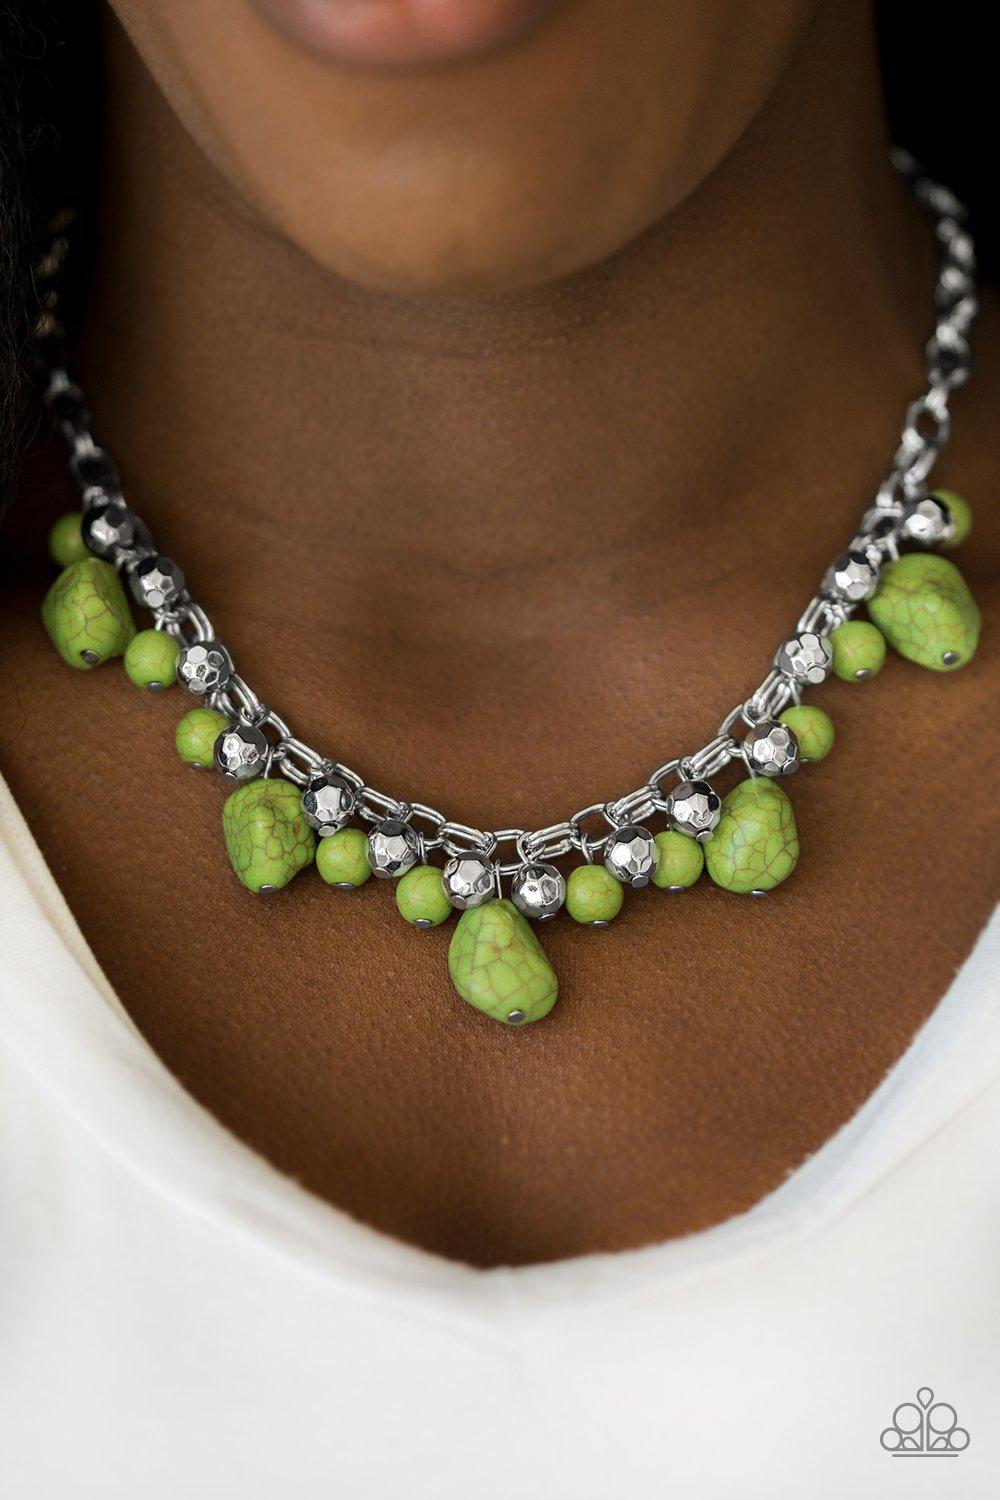 Paleo Princess Green Stone Necklace - Paparazzi Accessories - lightbox -CarasShop.com - $5 Jewelry by Cara Jewels